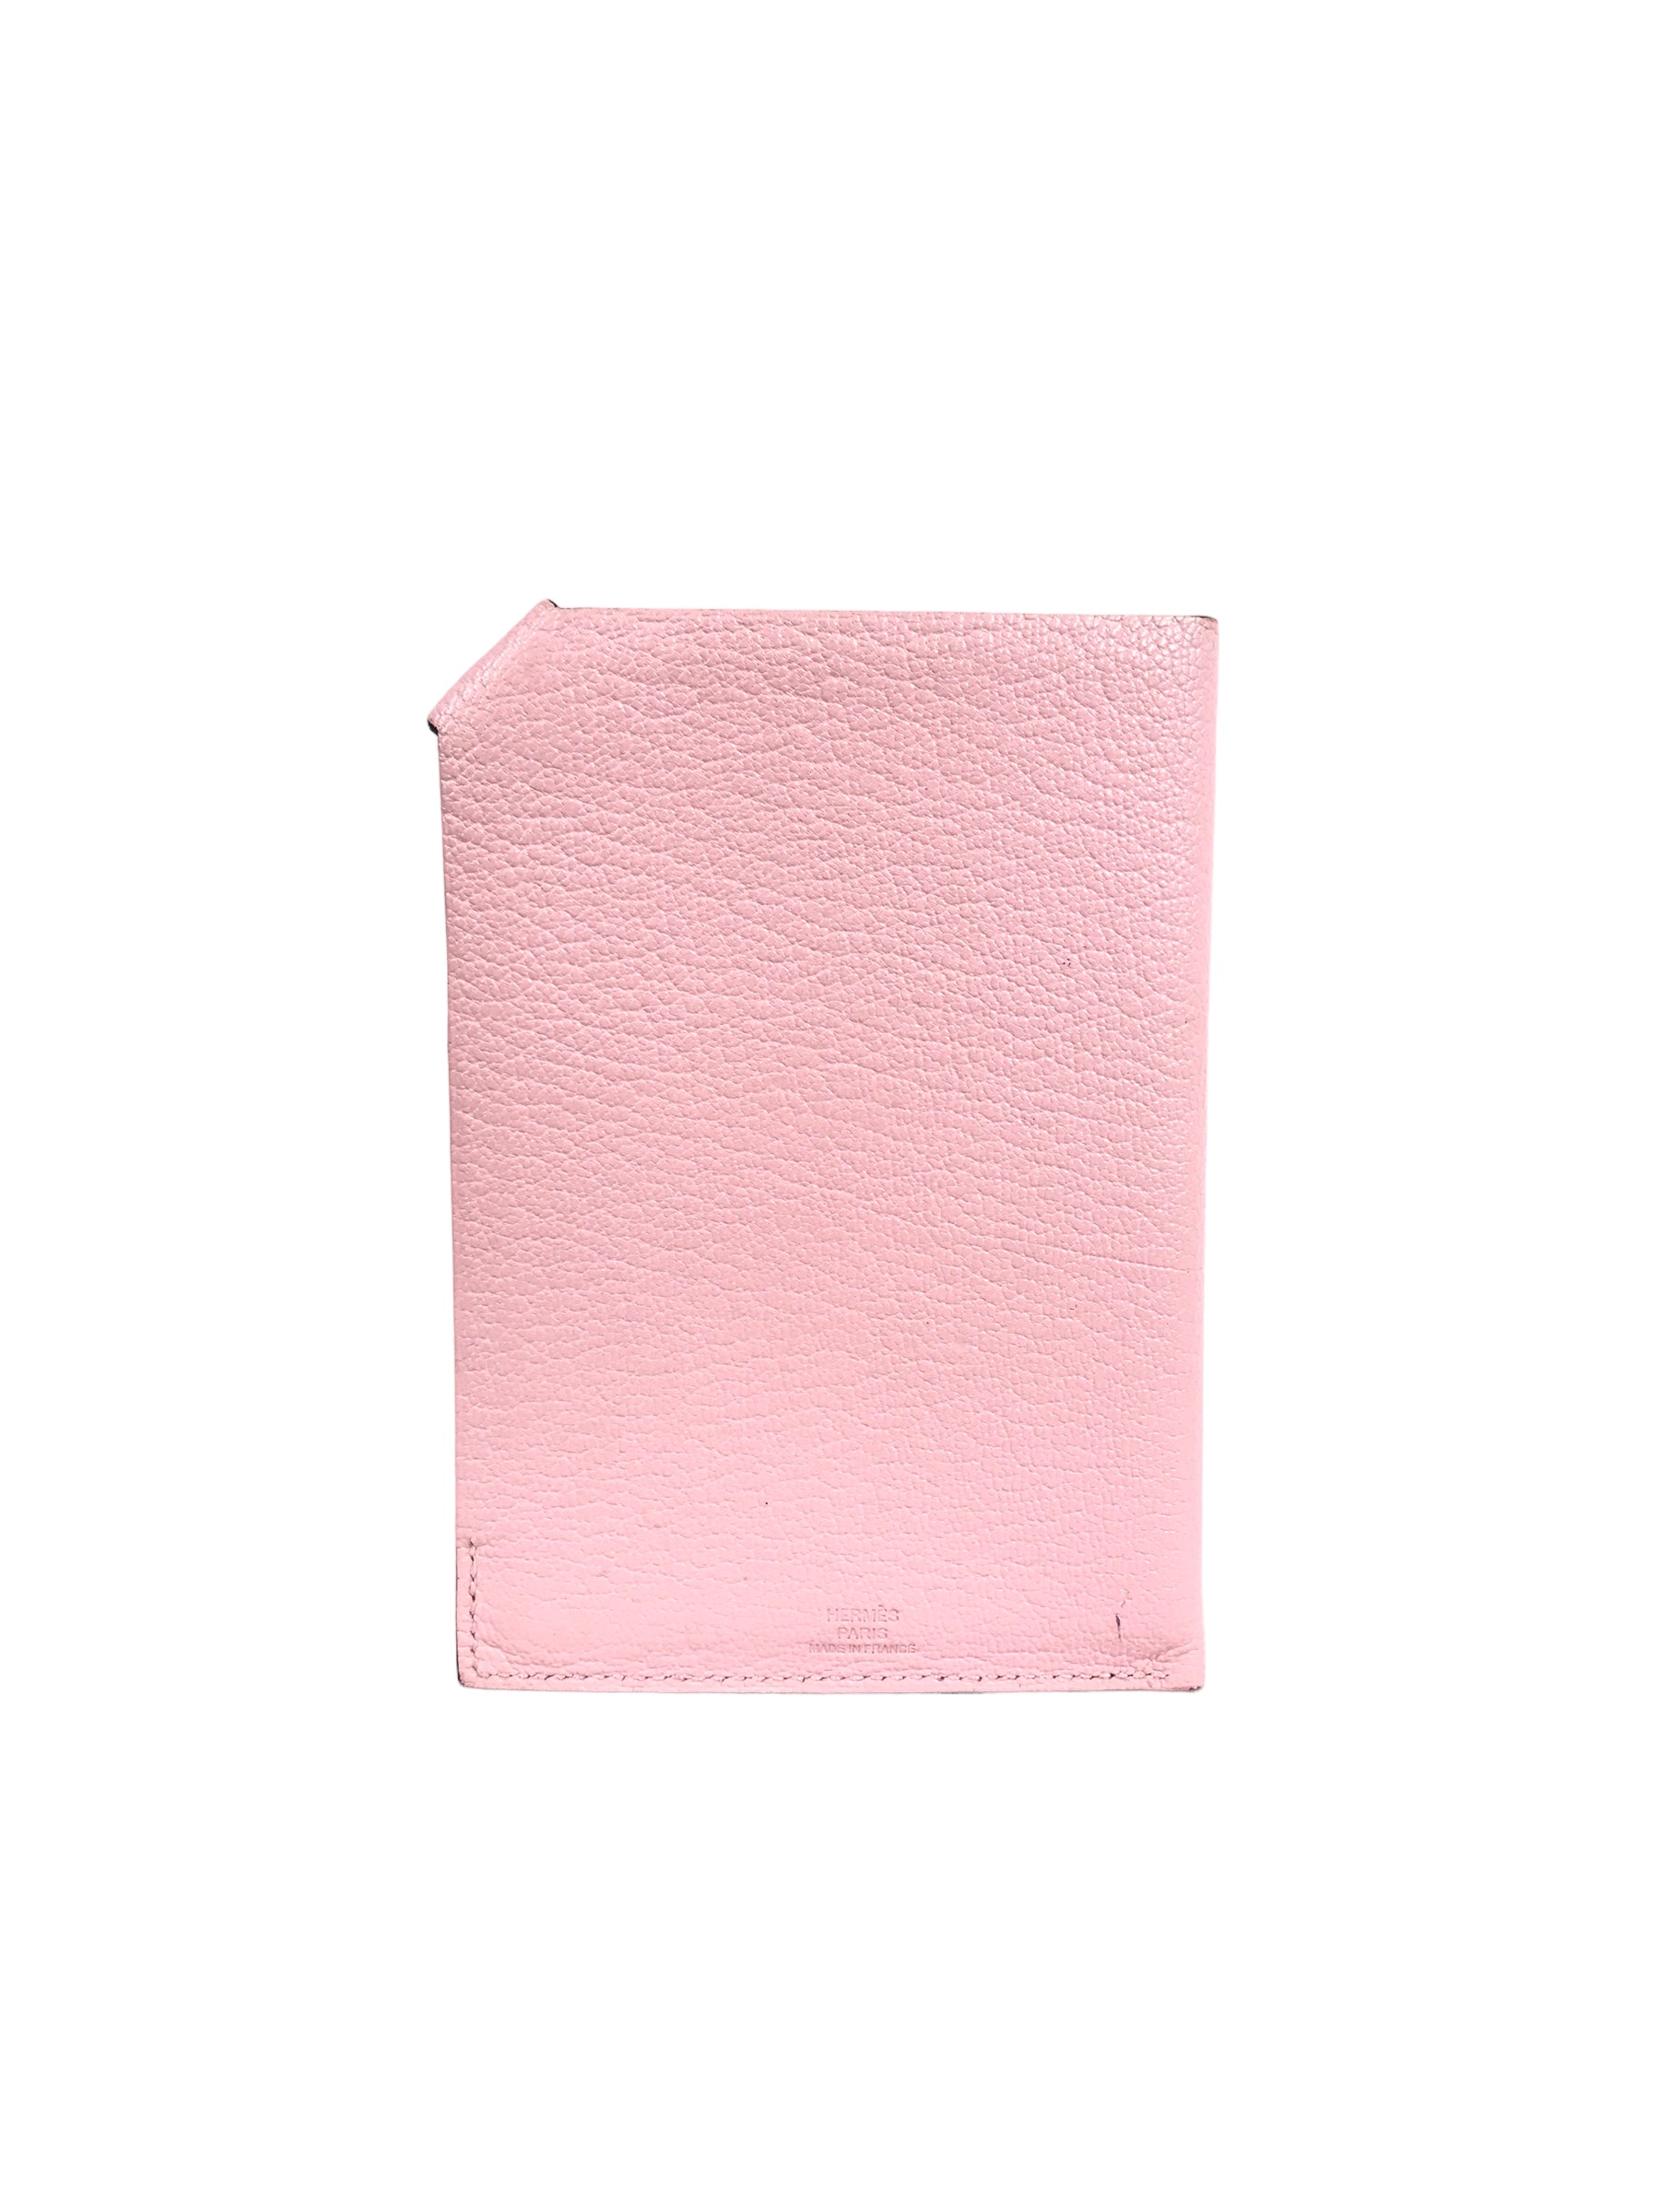 Sakura Pink Epsom Passport Holder